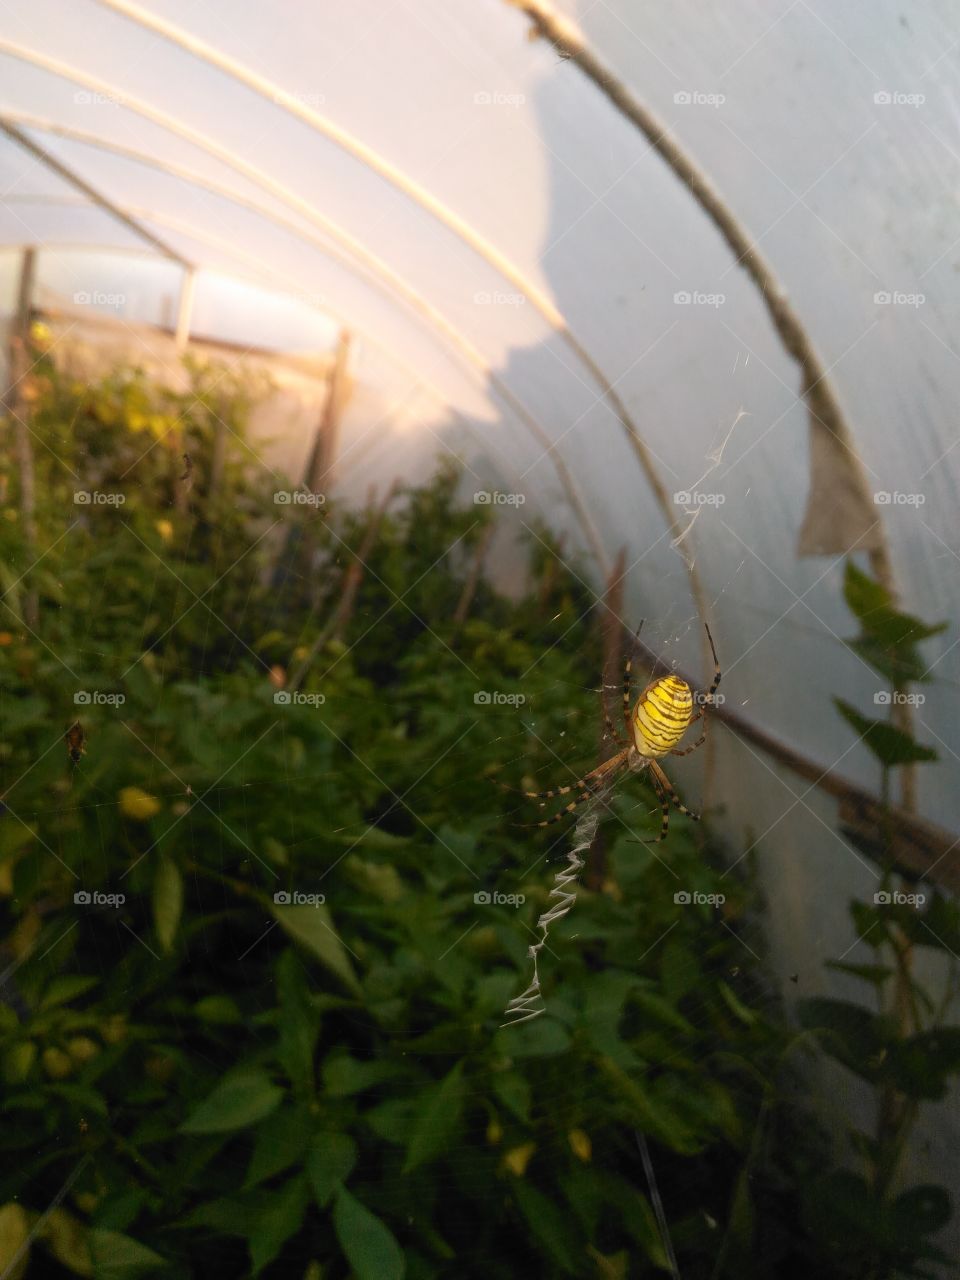 Beautiful spider